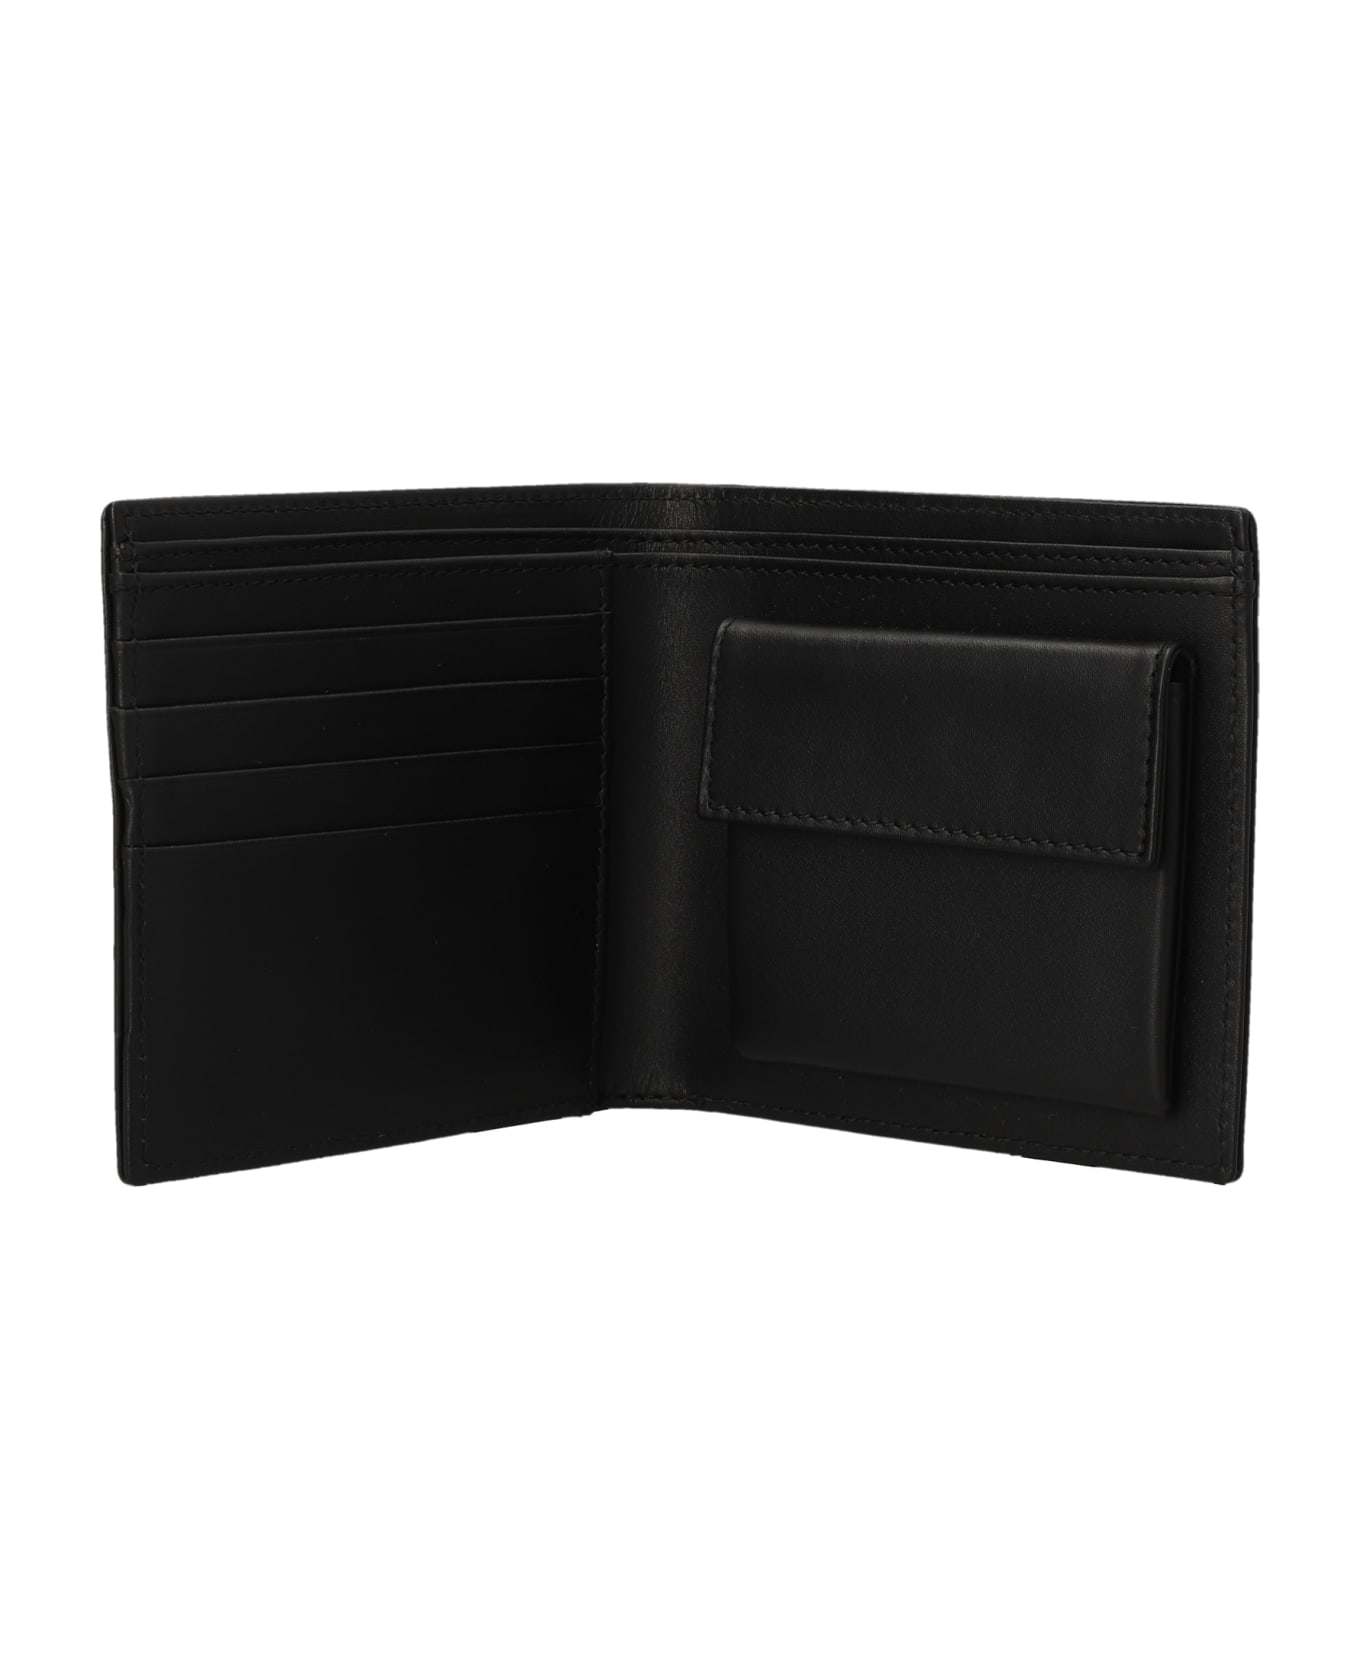 A.P.C. New London Wallet - BLACK 財布